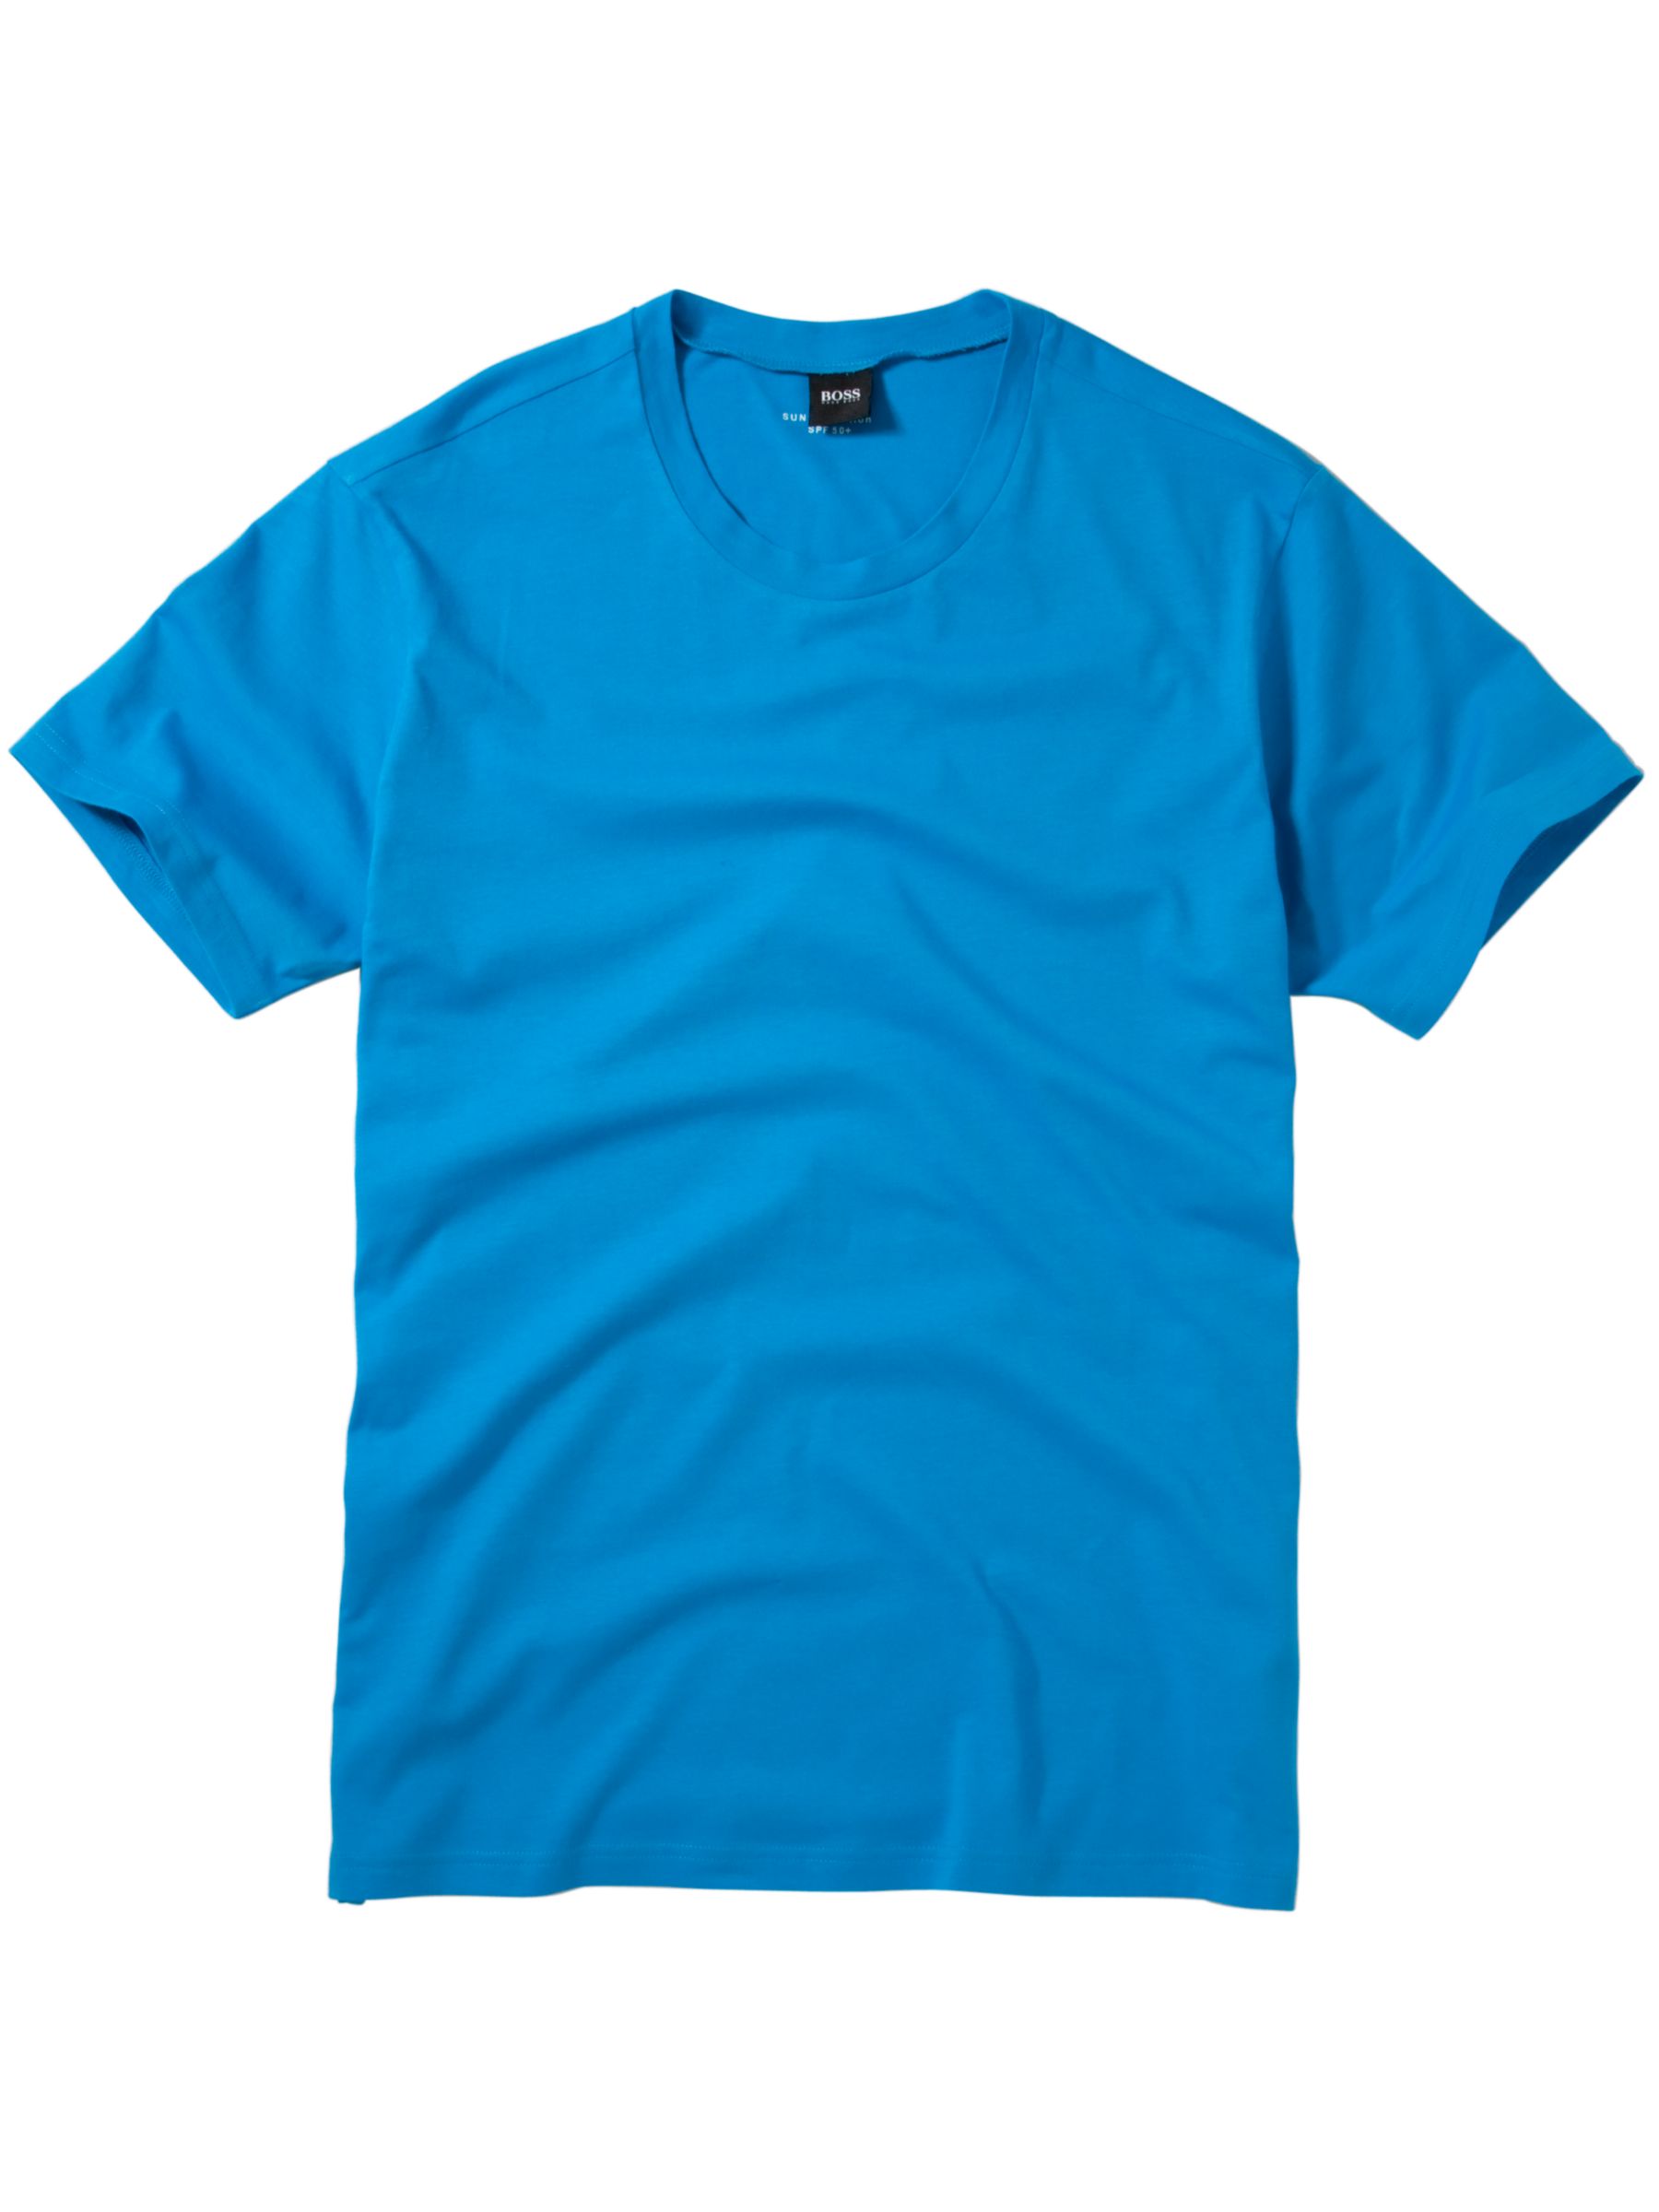 Beach Logo T-Shirt, Turquoise